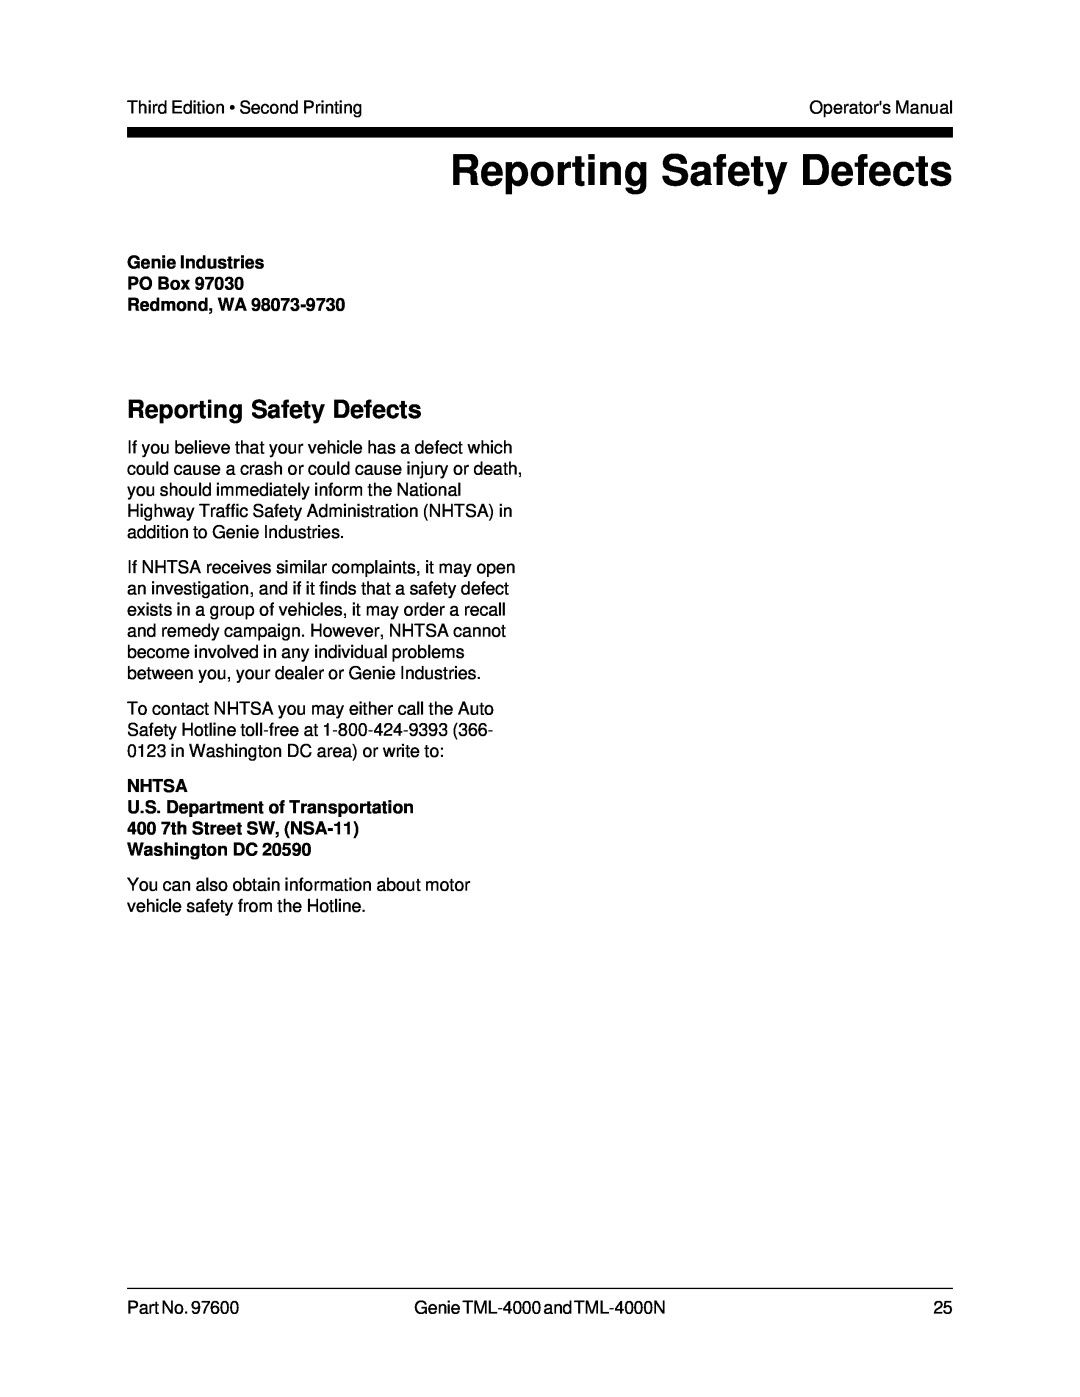 Genie TML-4000N manual Reporting Safety Defects, Genie Industries PO Box Redmond, WA, Nhtsa 